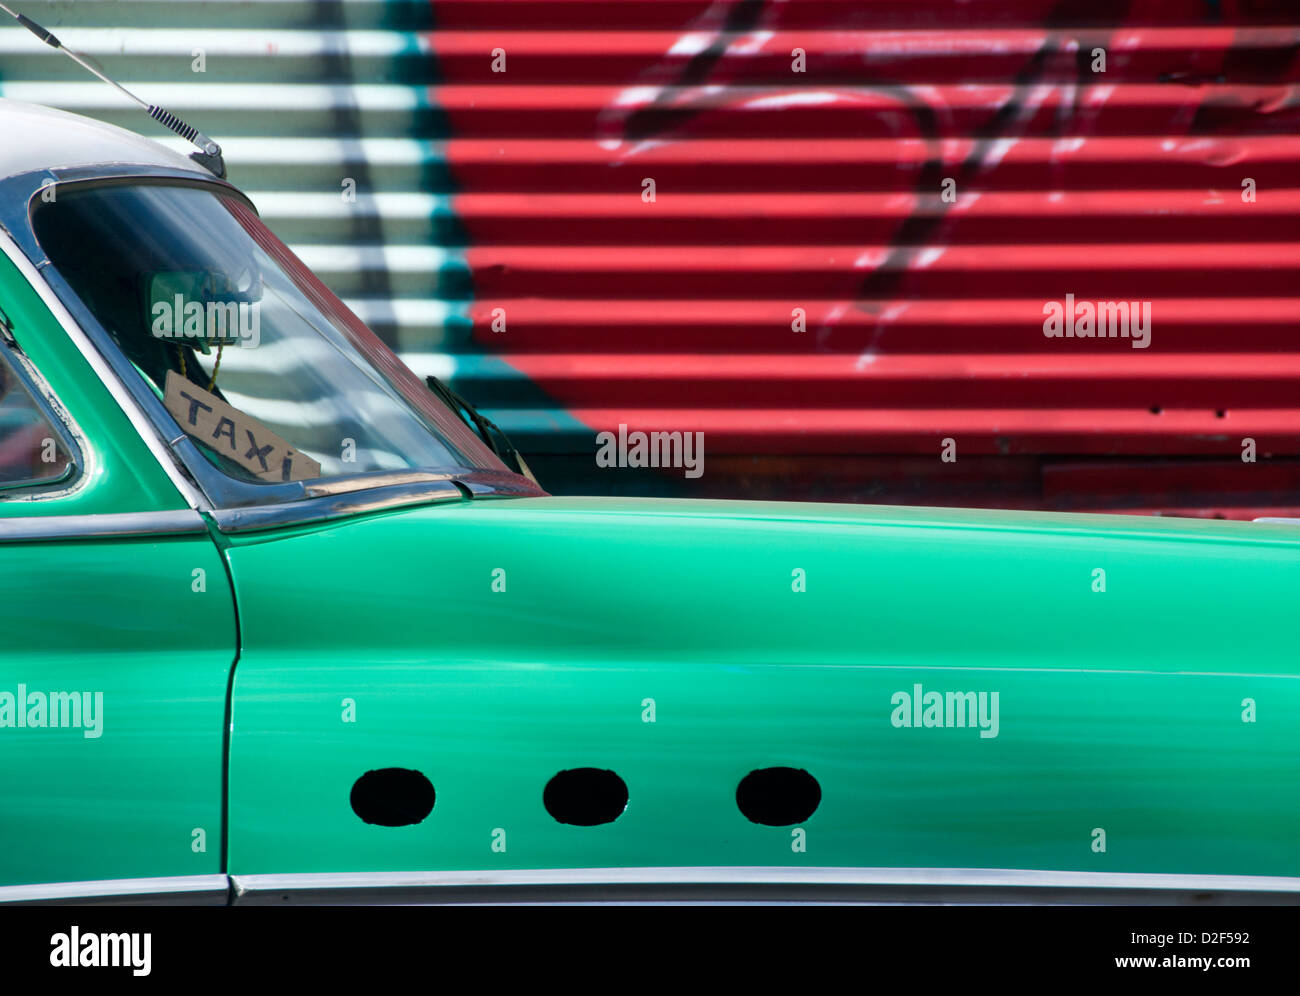 Klassische amerikanische 1950 Auto als ein Taxi mit Graffiti Hintergrund, Havana, Havanna, Kuba Stockfoto